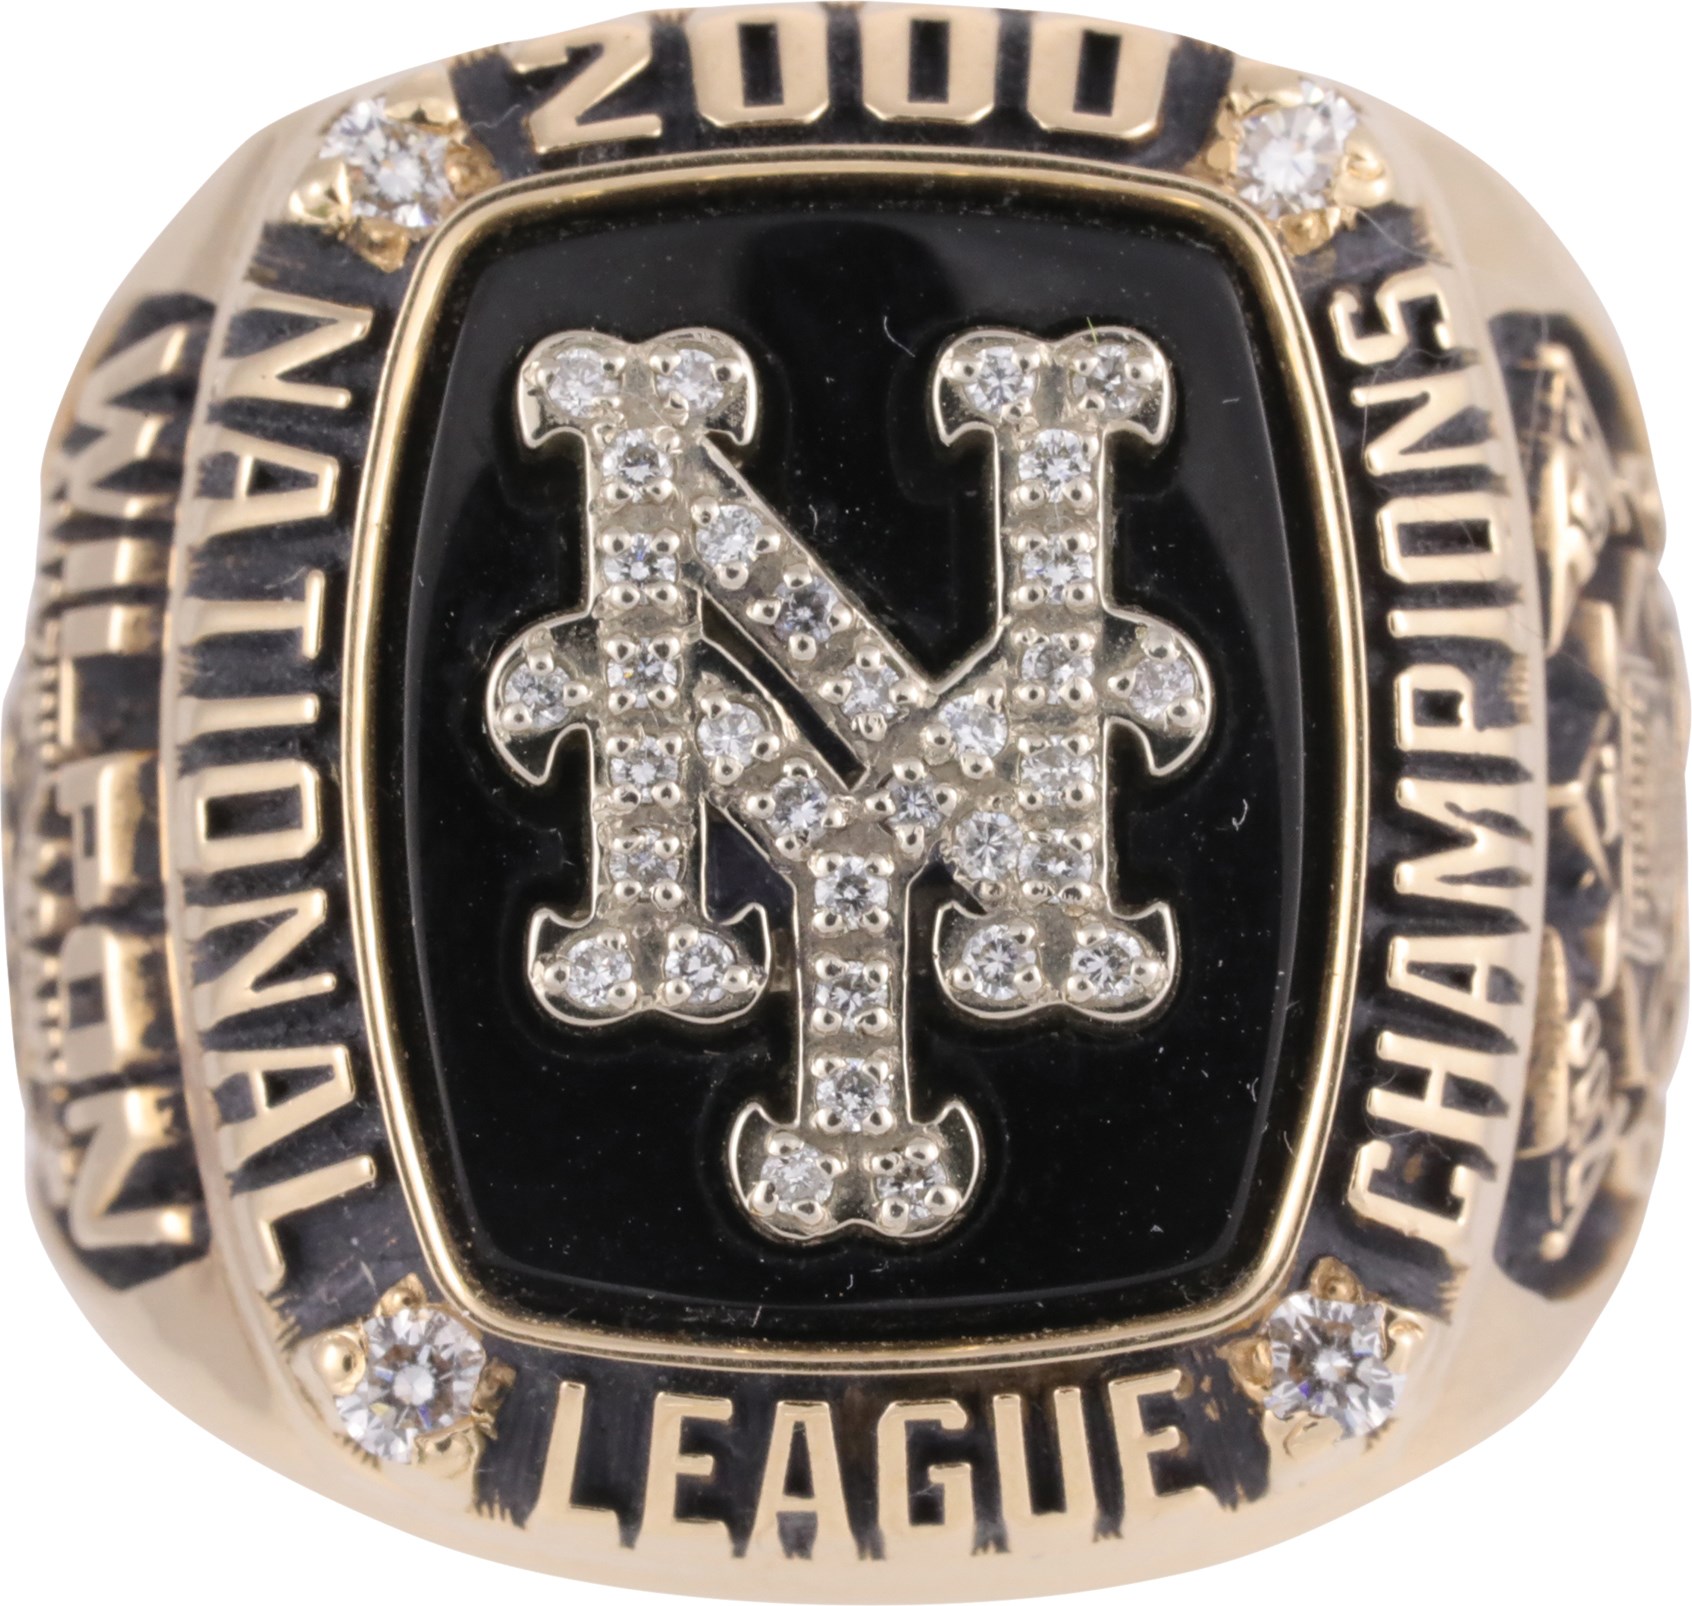 Baseball Awards - 2000 New York Mets National League Championship Prototype Ring